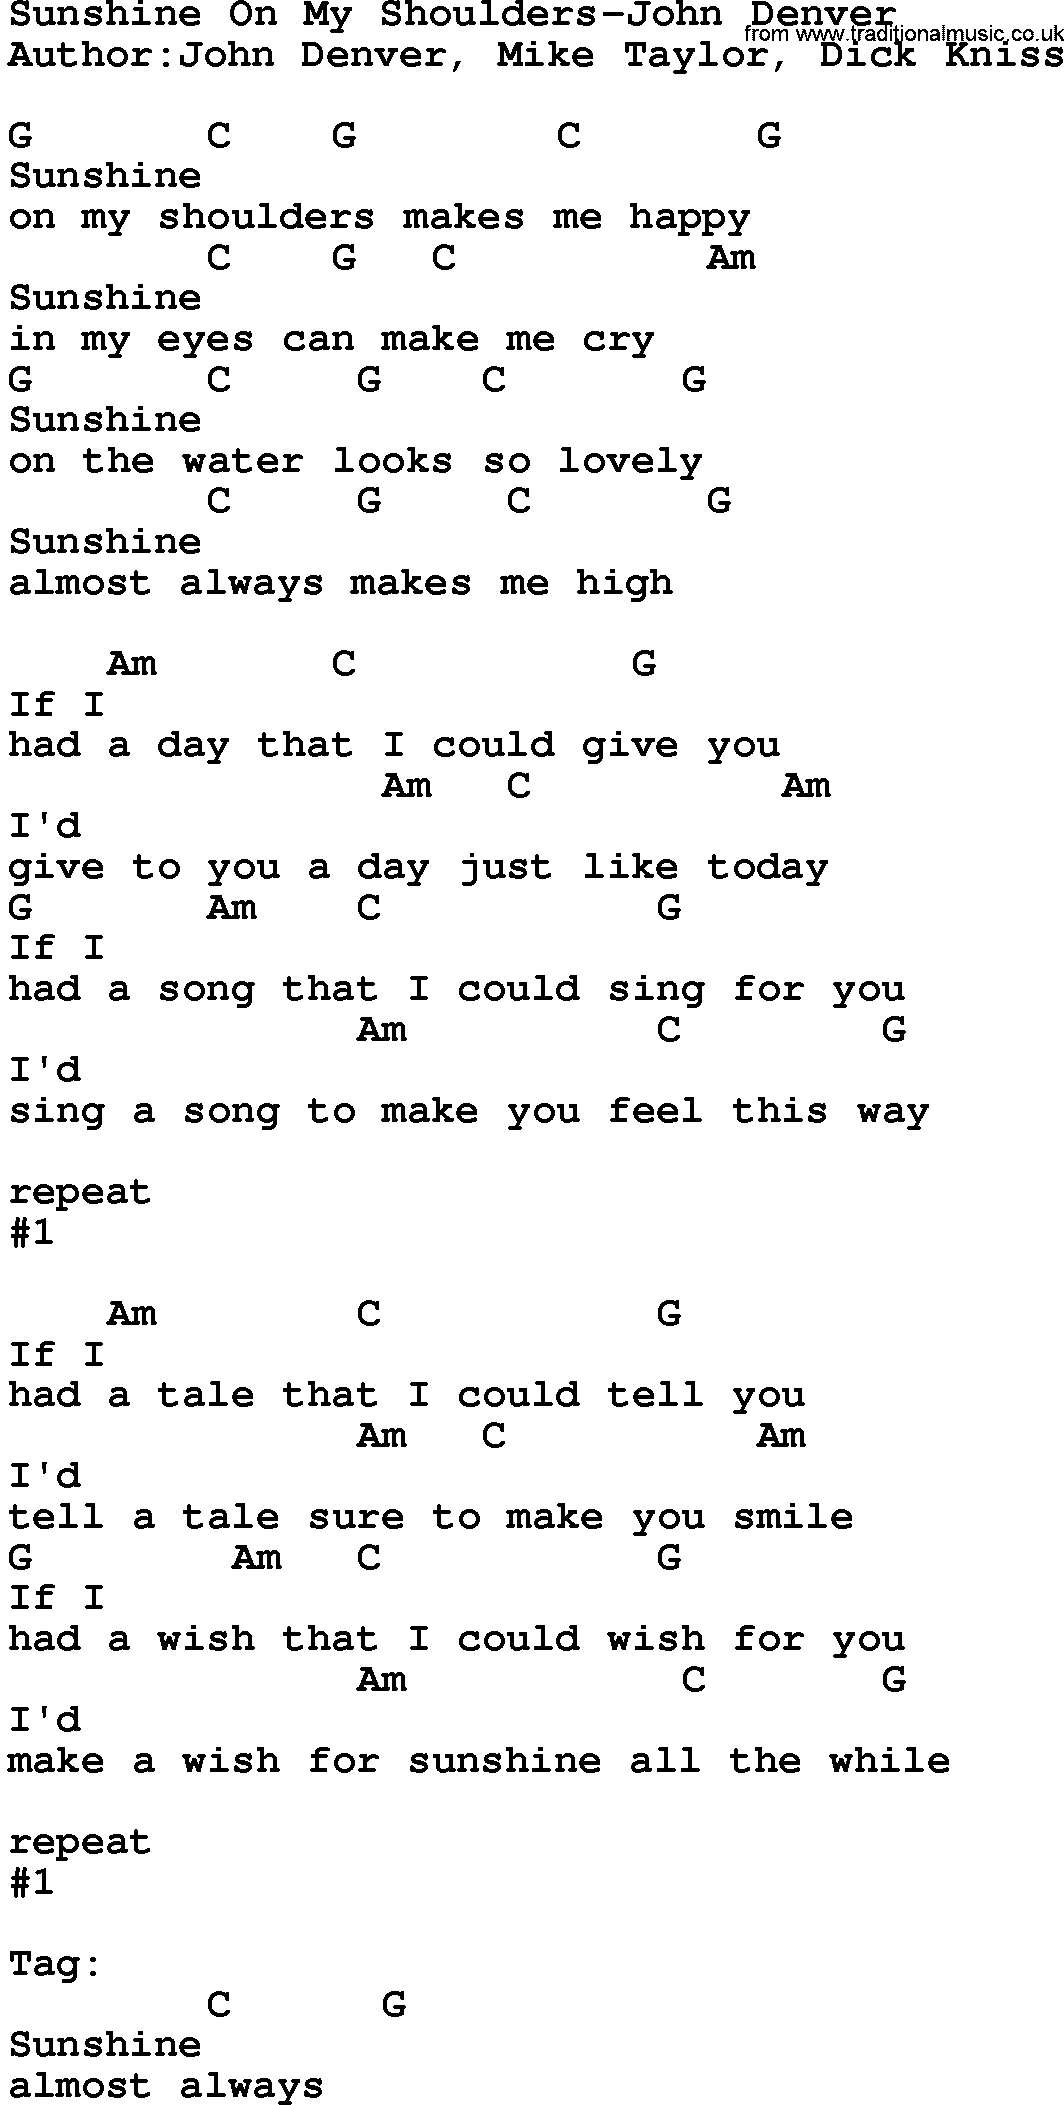 Behind the Song Lyrics: Sunshine on My Shoulders by John Denver